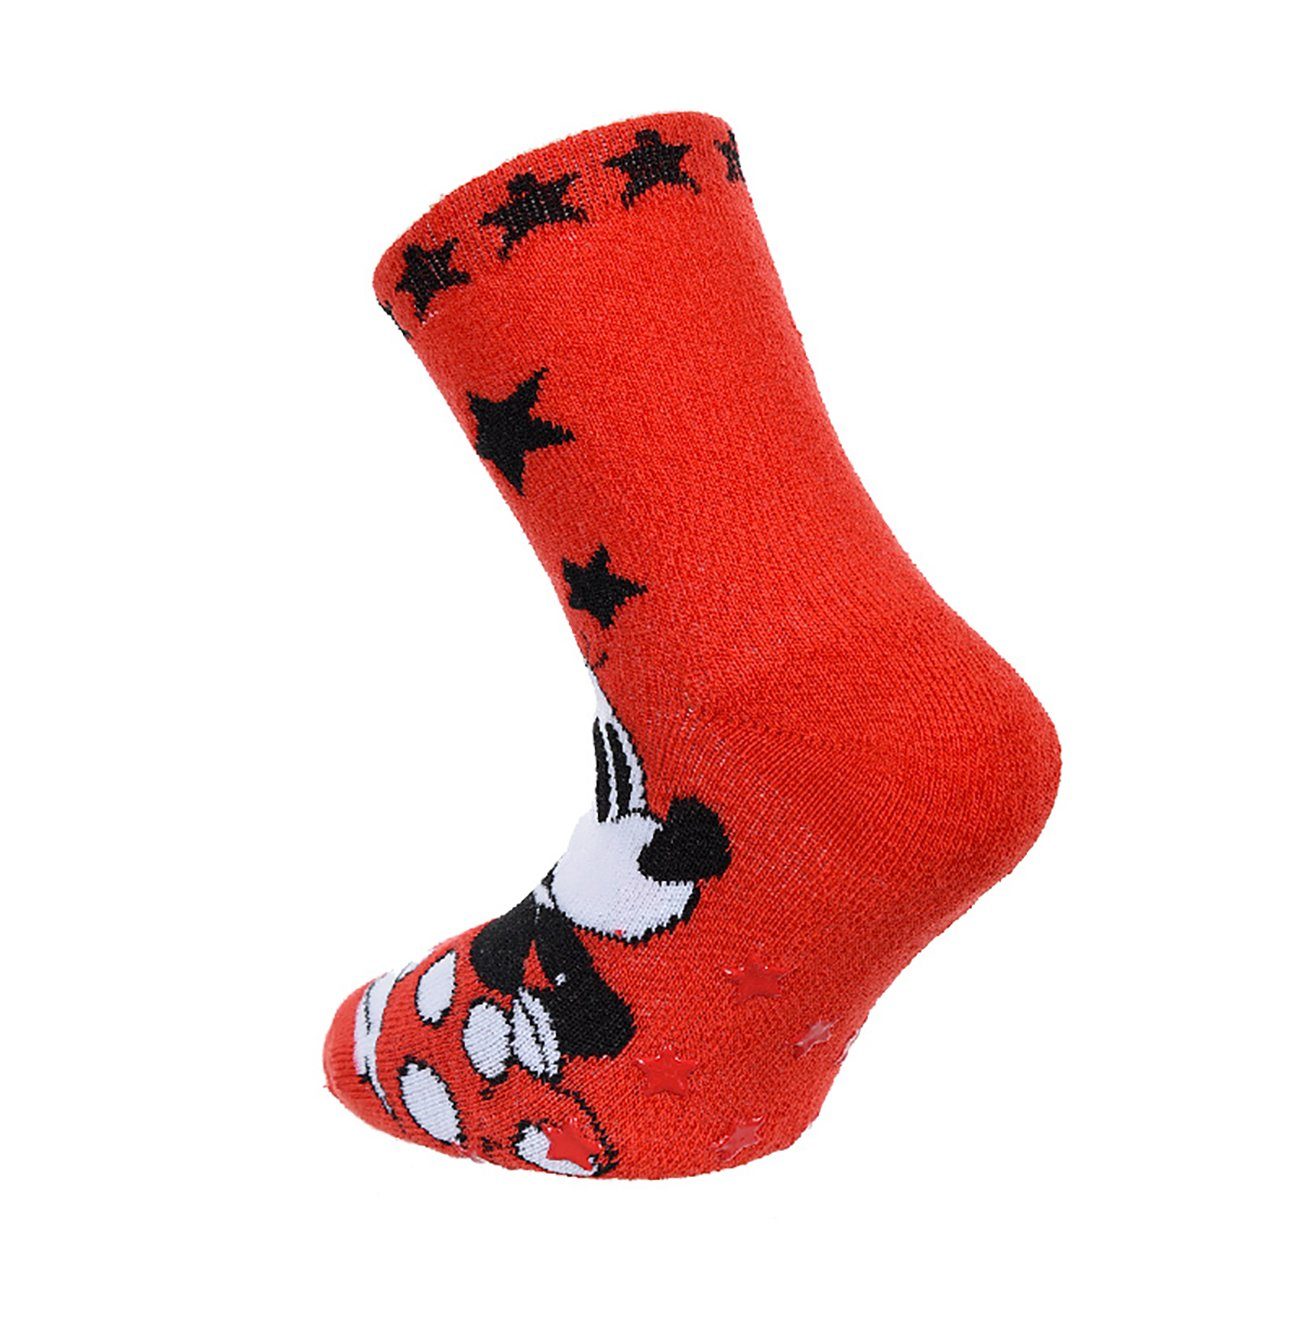 Disney Minnie Mouse Socken 2er Pack, Socken, Antirutsch, Kinder rot/pink